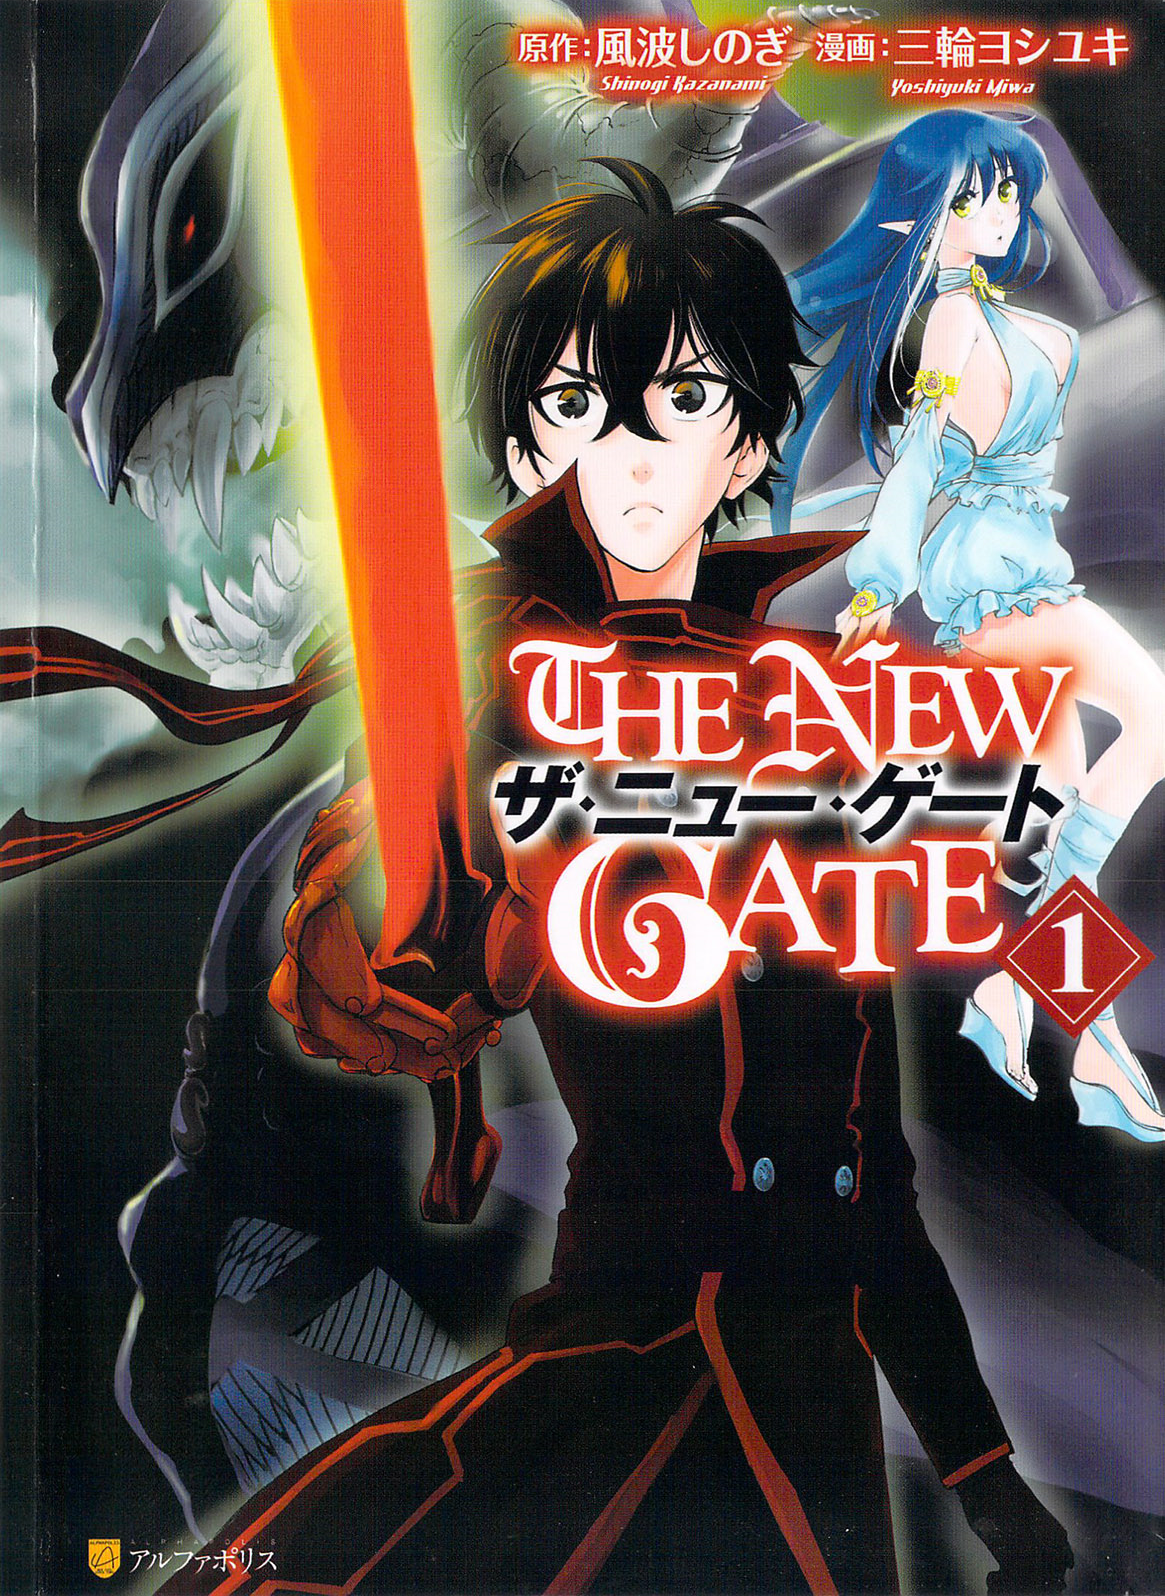 Volume 1 Manga The New Gate Wiki Fandom